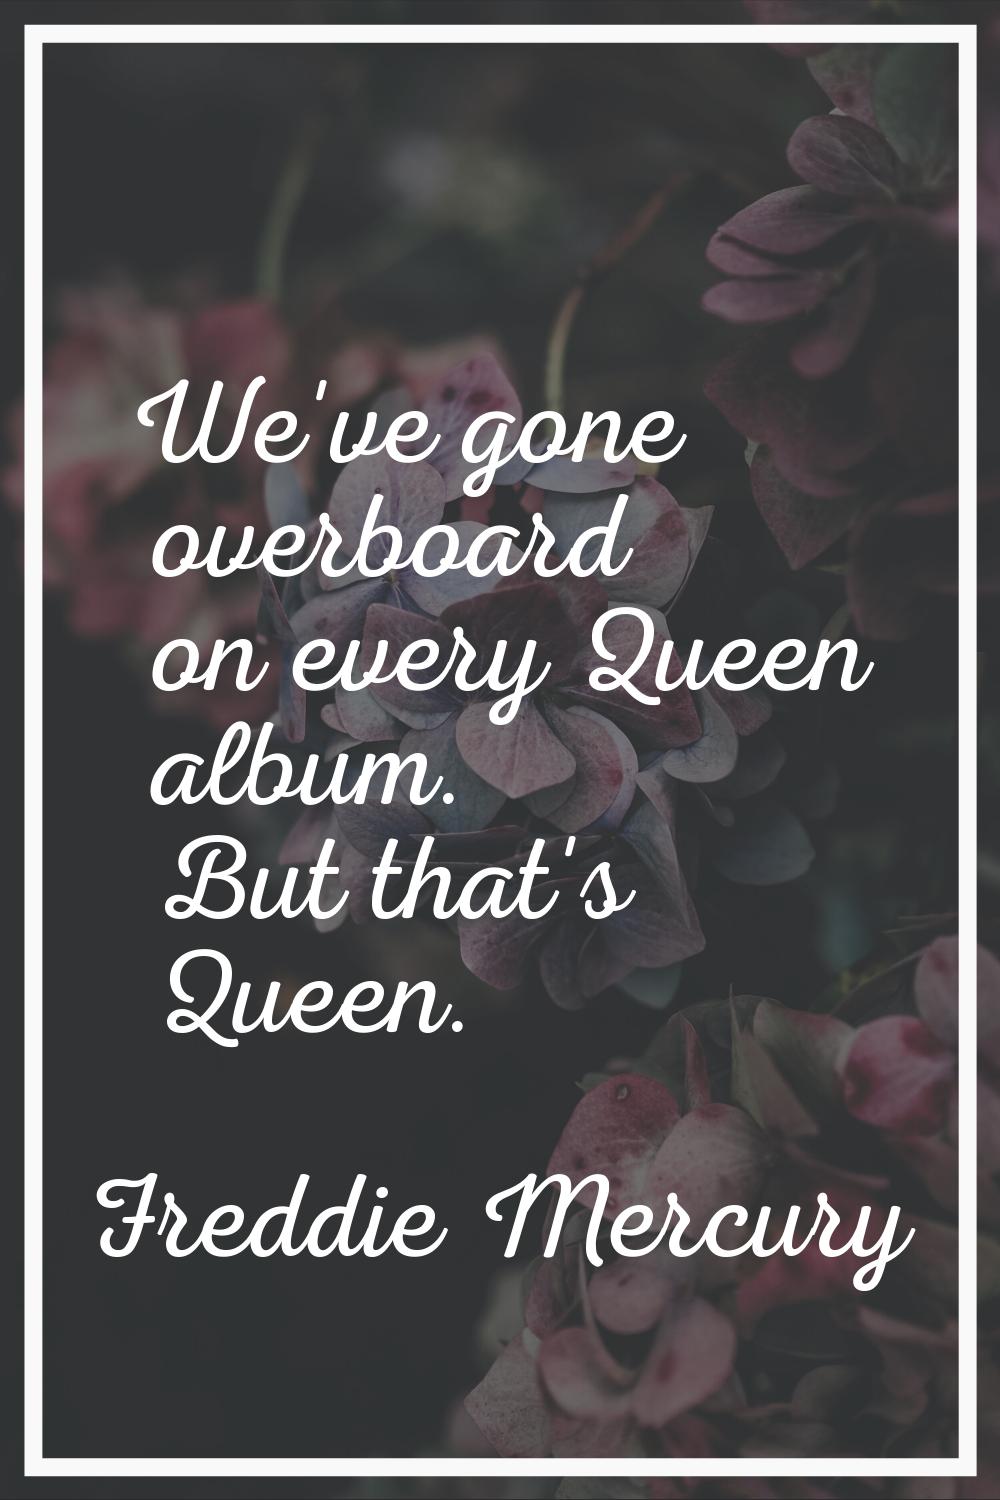 We've gone overboard on every Queen album. But that's Queen.